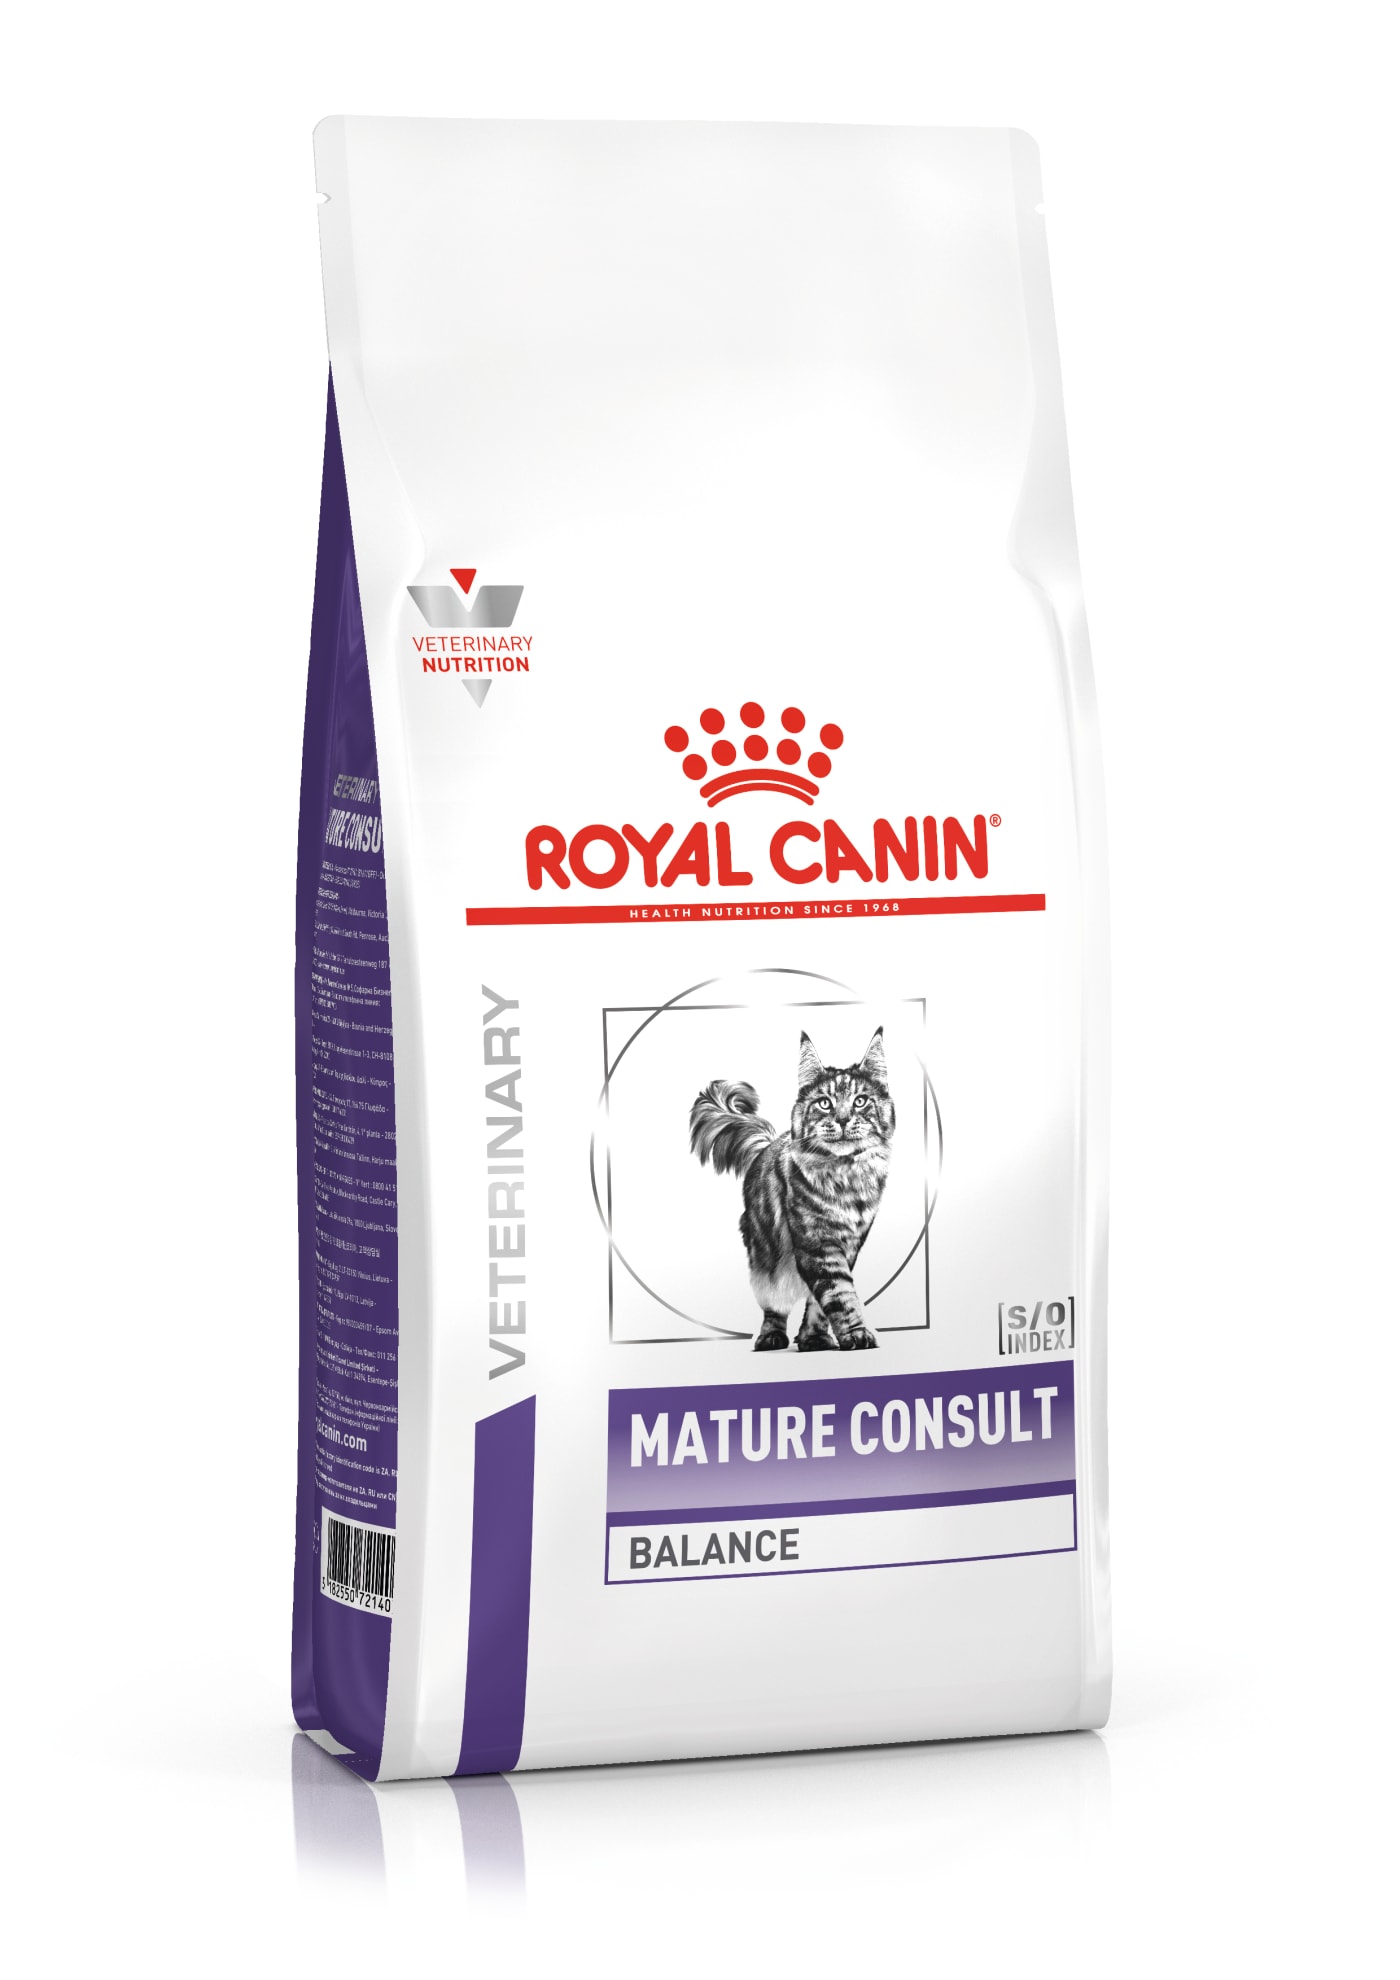 royal canin senior consult cat food